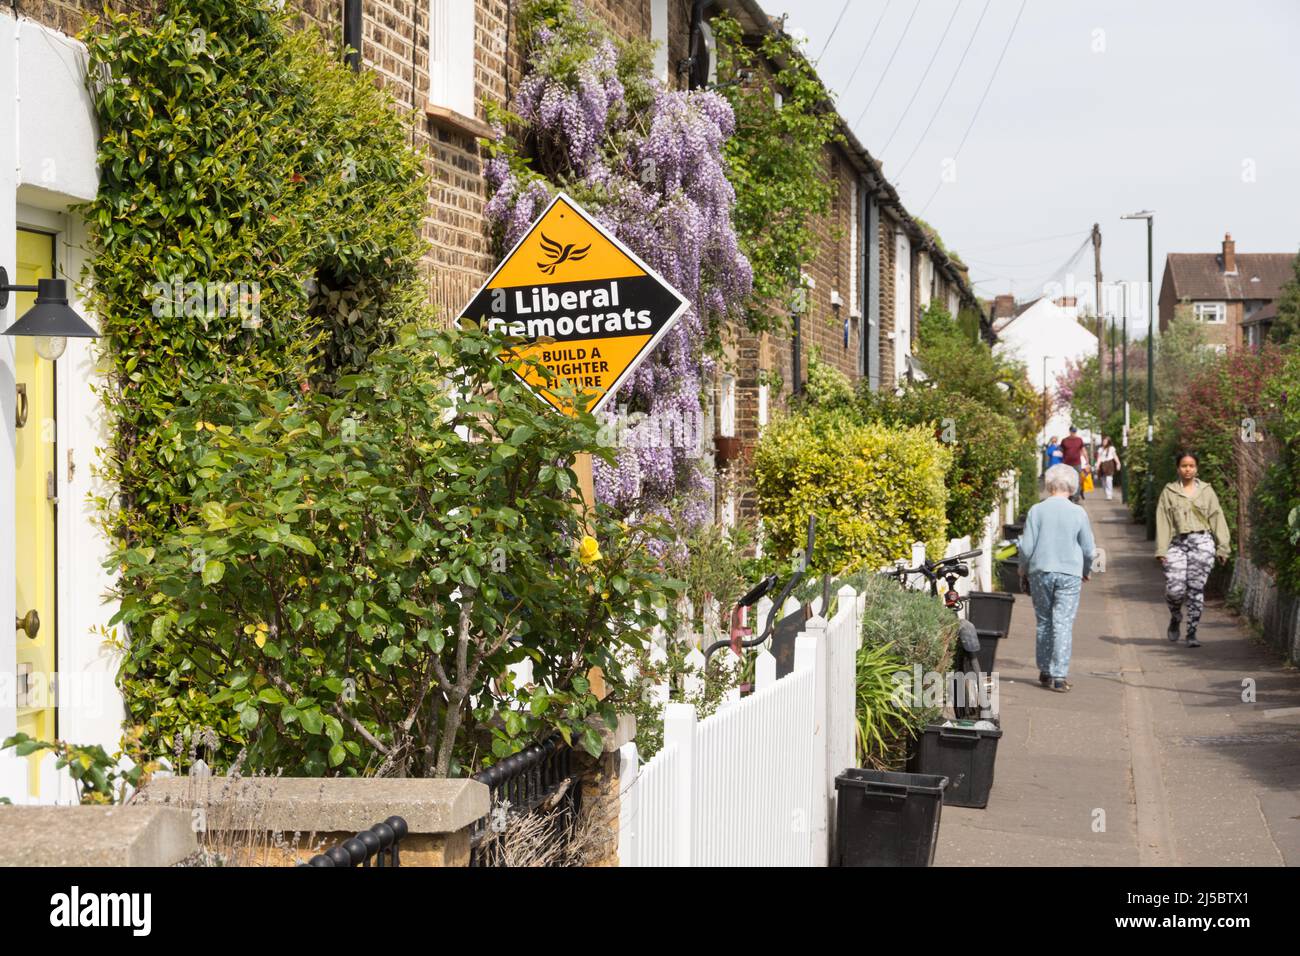 Vota Partido Electoral Local Liberal Demócrata Pancartas políticas y hoardings que se levantan en Barnes, al suroeste de Londres, Richmond upon Thames, Londres, Inglaterra Foto de stock